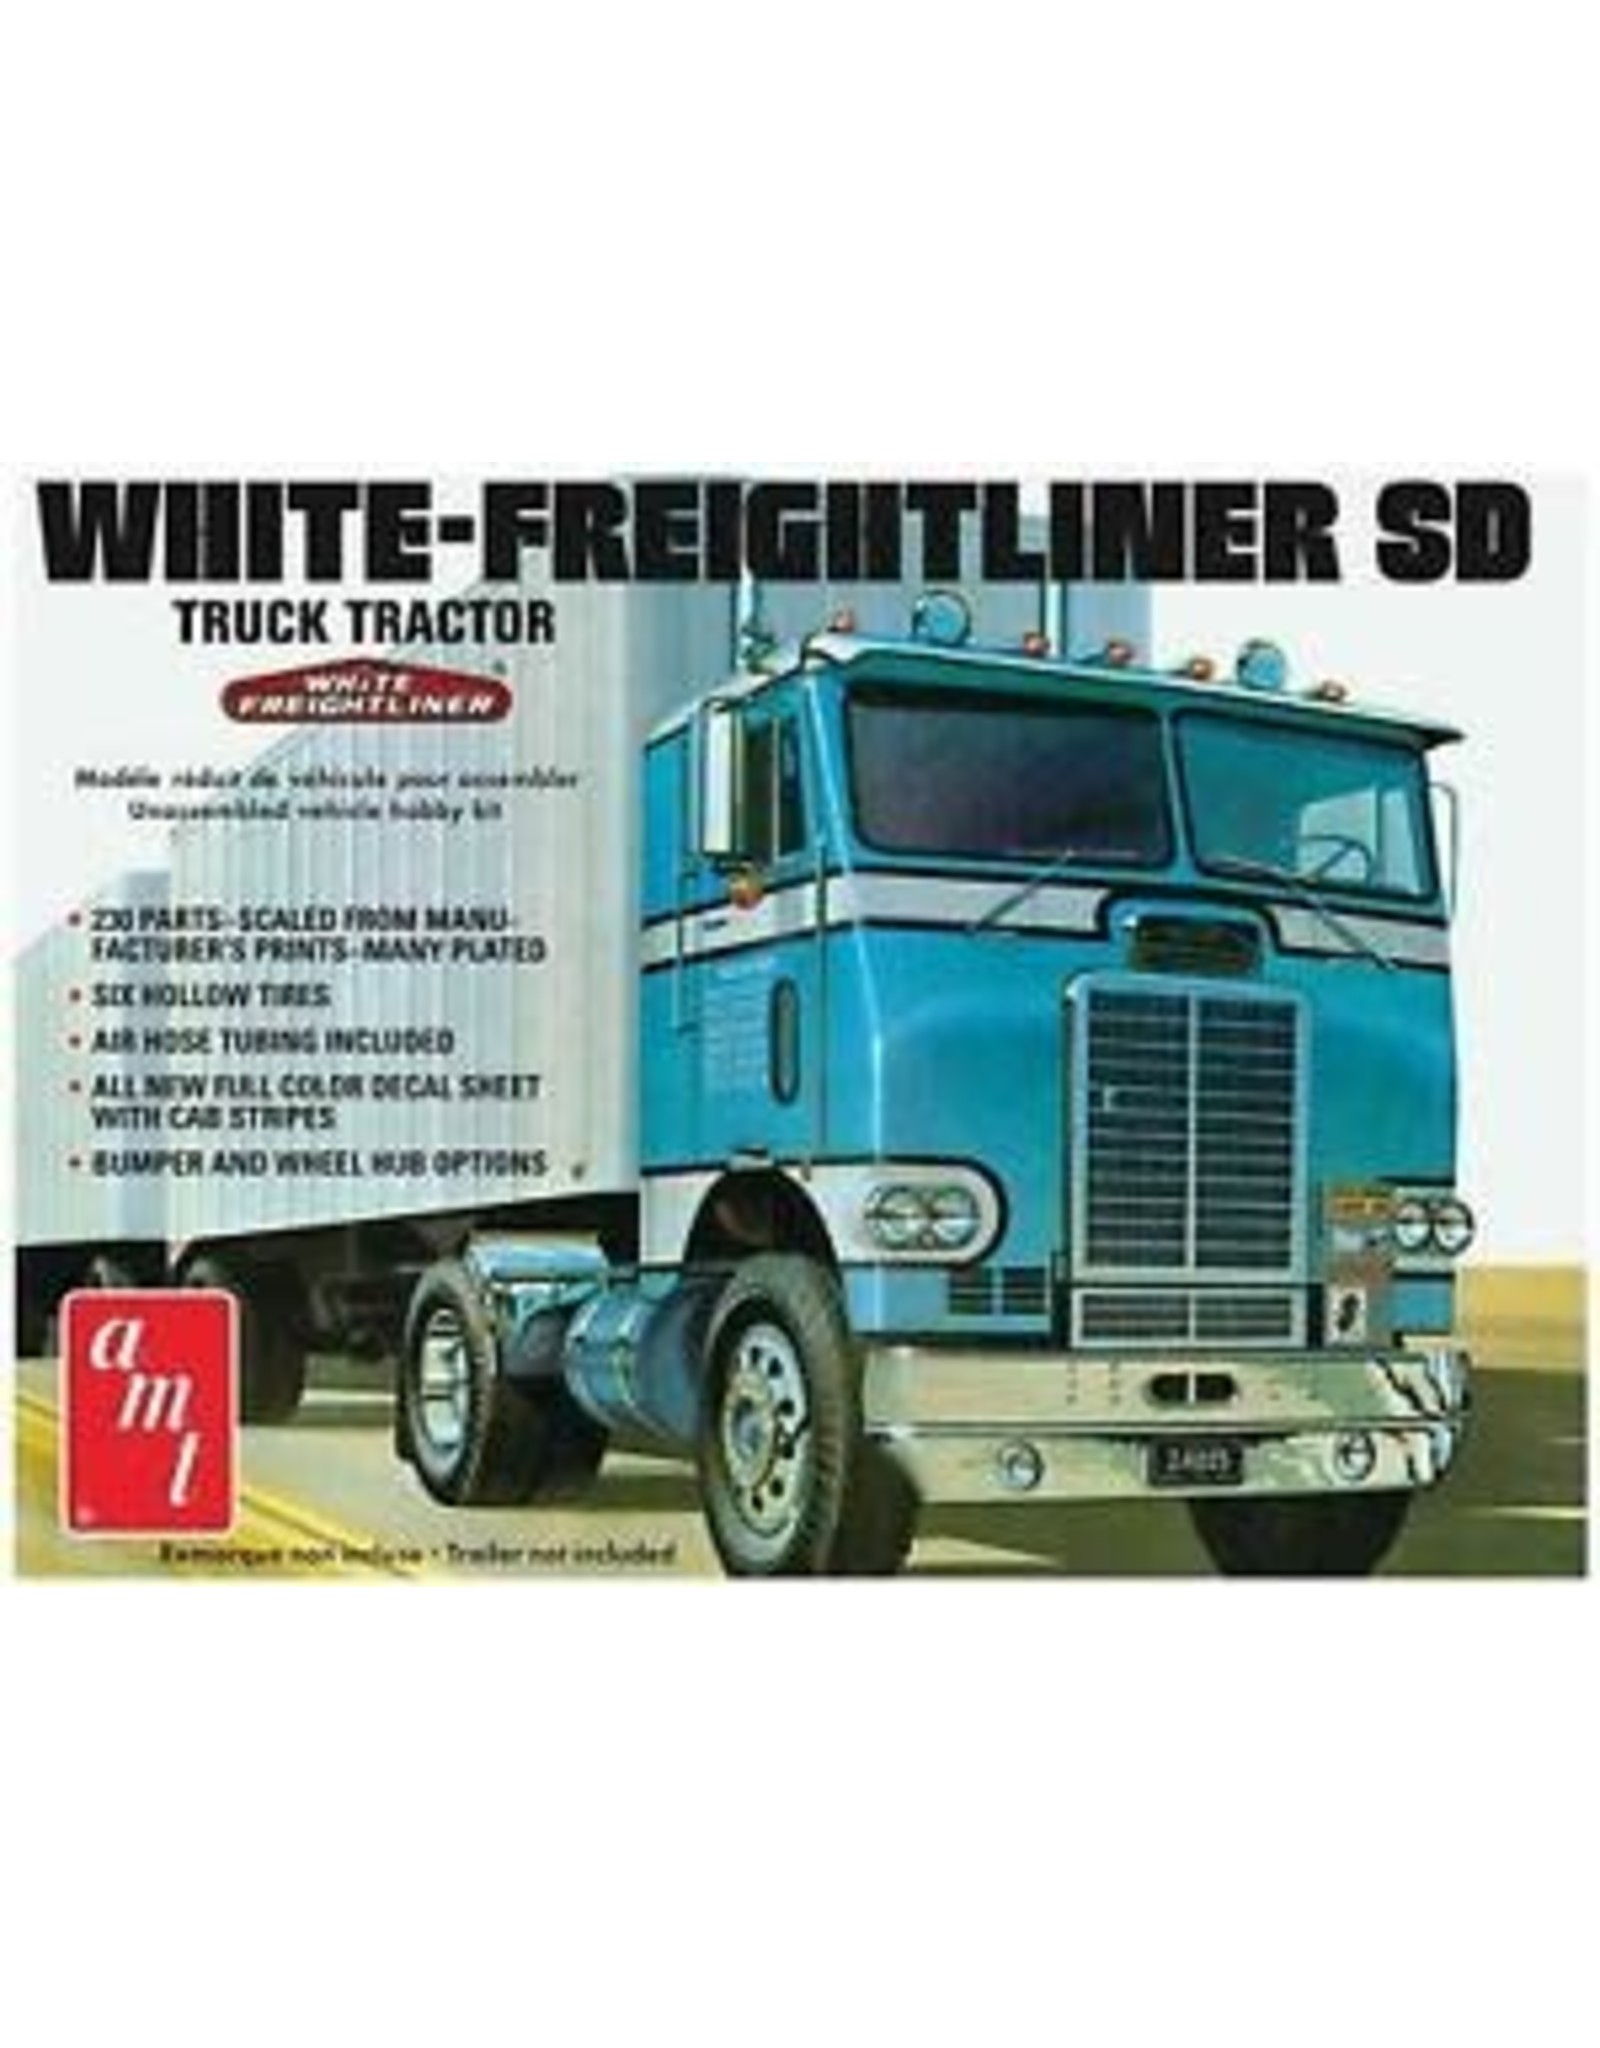 amt White freightliner SD